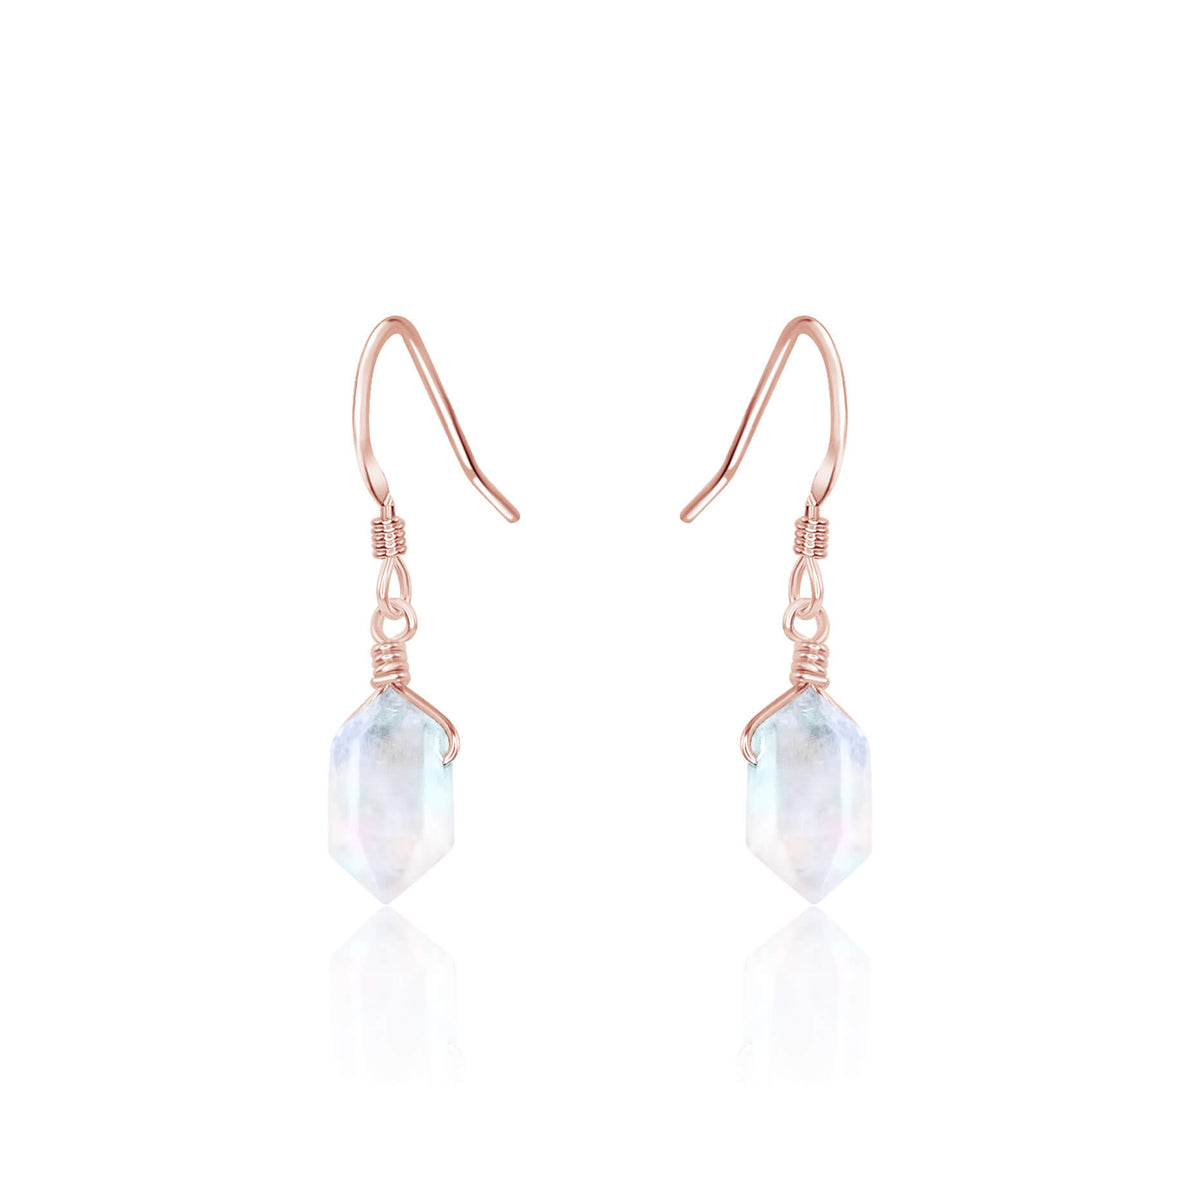 Double Terminated Crystal Dangle Drop Earrings - Rainbow Moonstone - 14K Rose Gold Fill - Luna Tide Handmade Jewellery